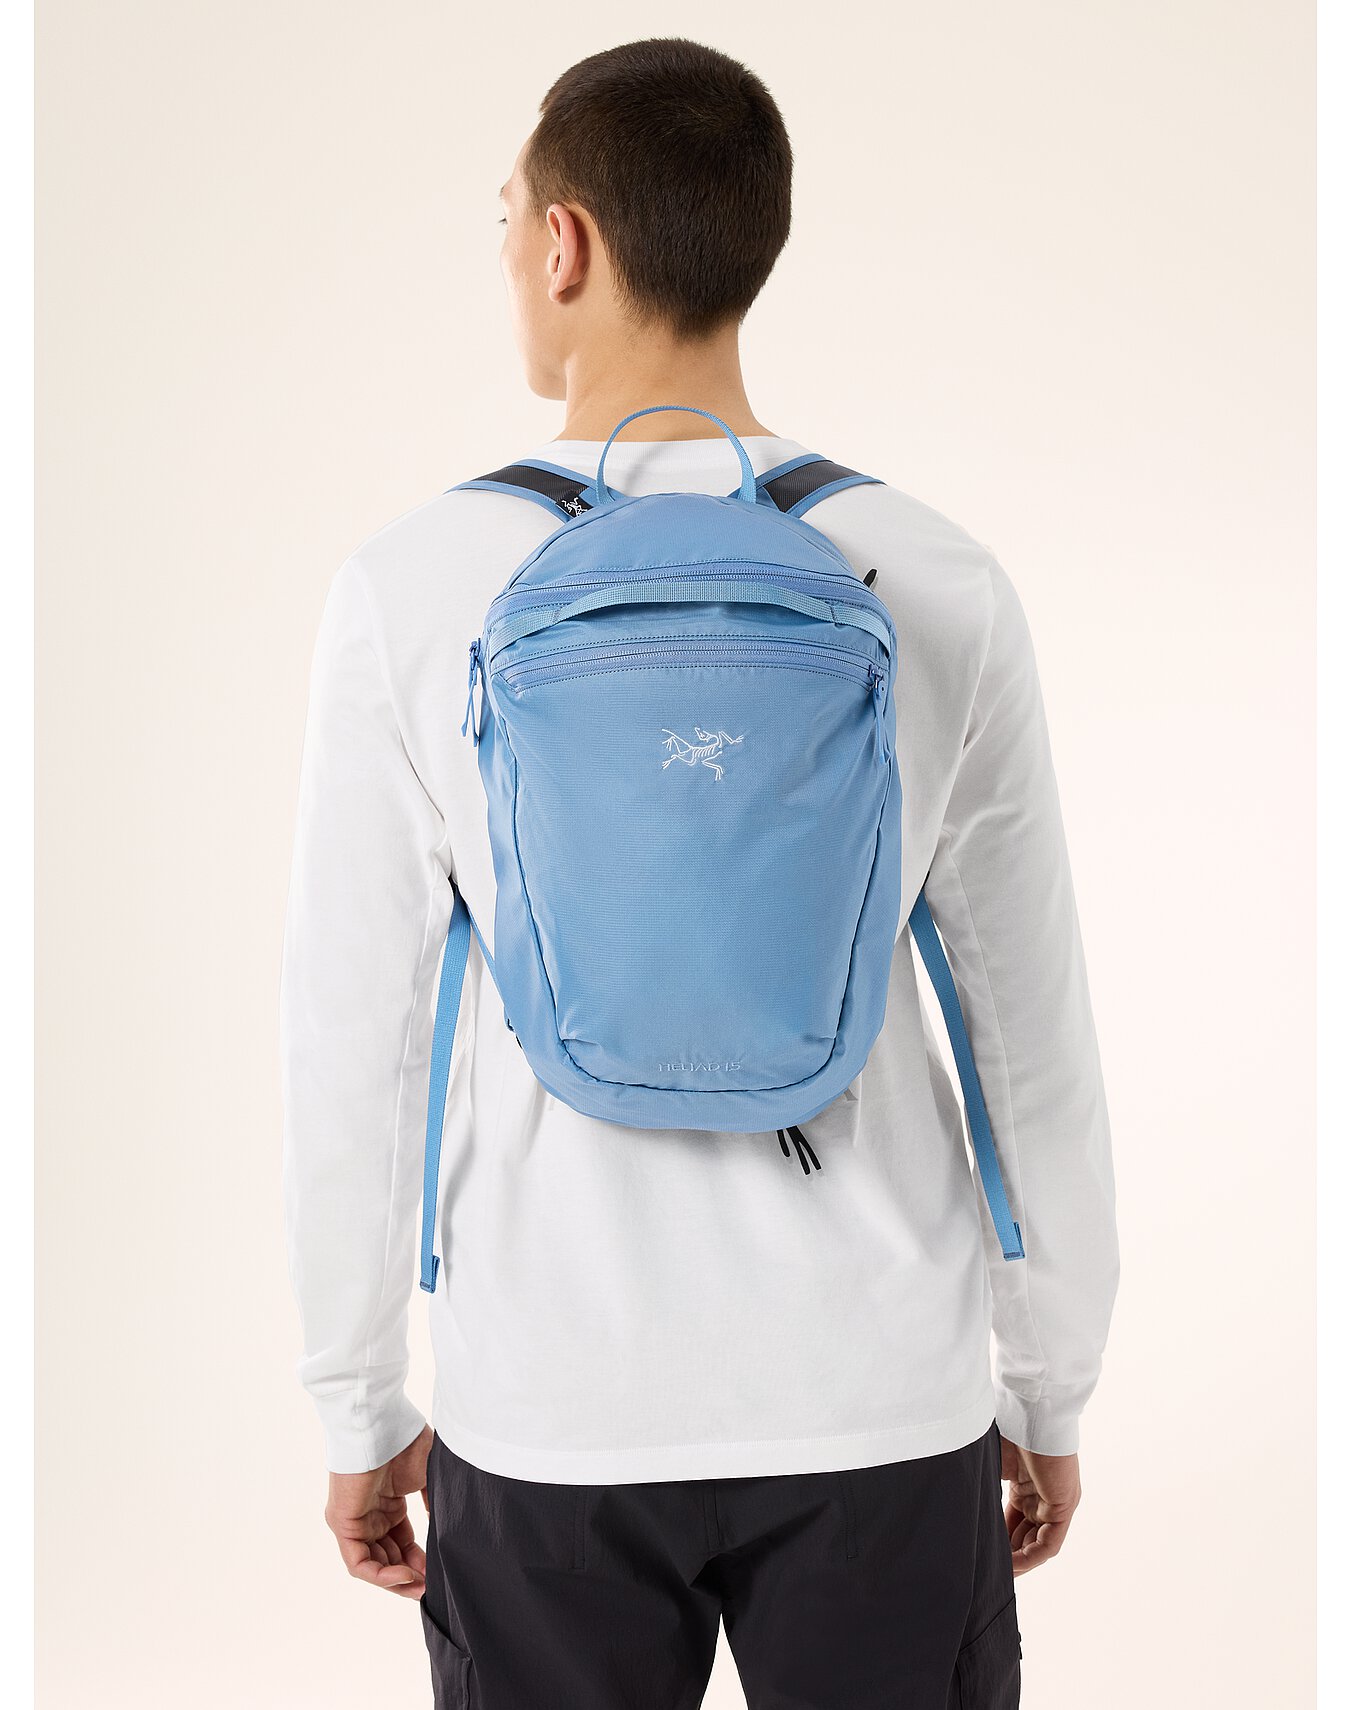 Heliad 15 Backpack | Arc'teryx